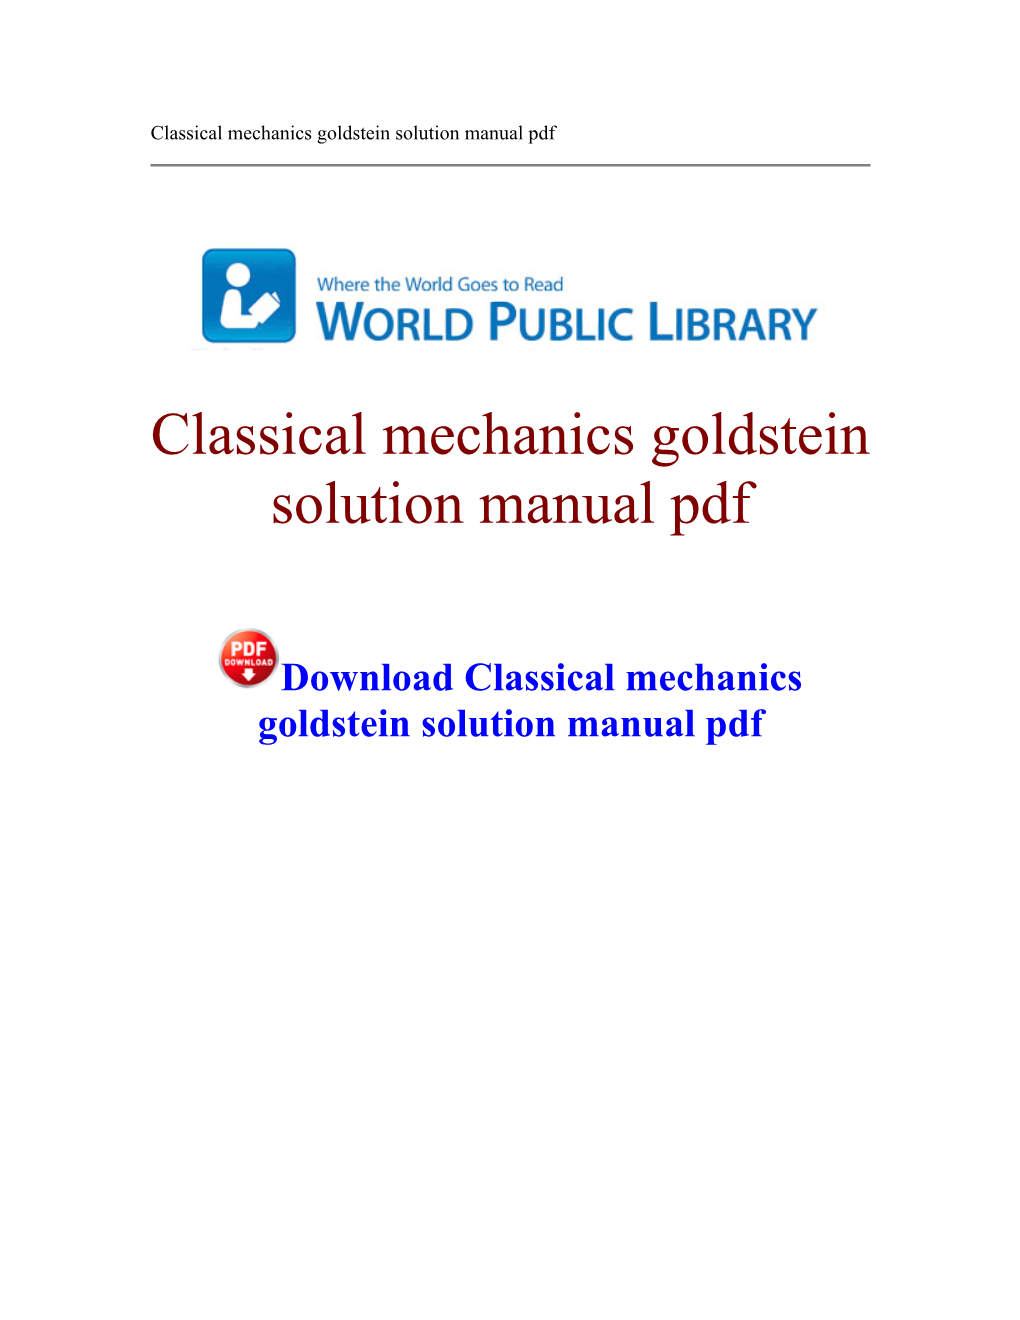 Classical Mechanics Goldstein Solution Manual Pdf